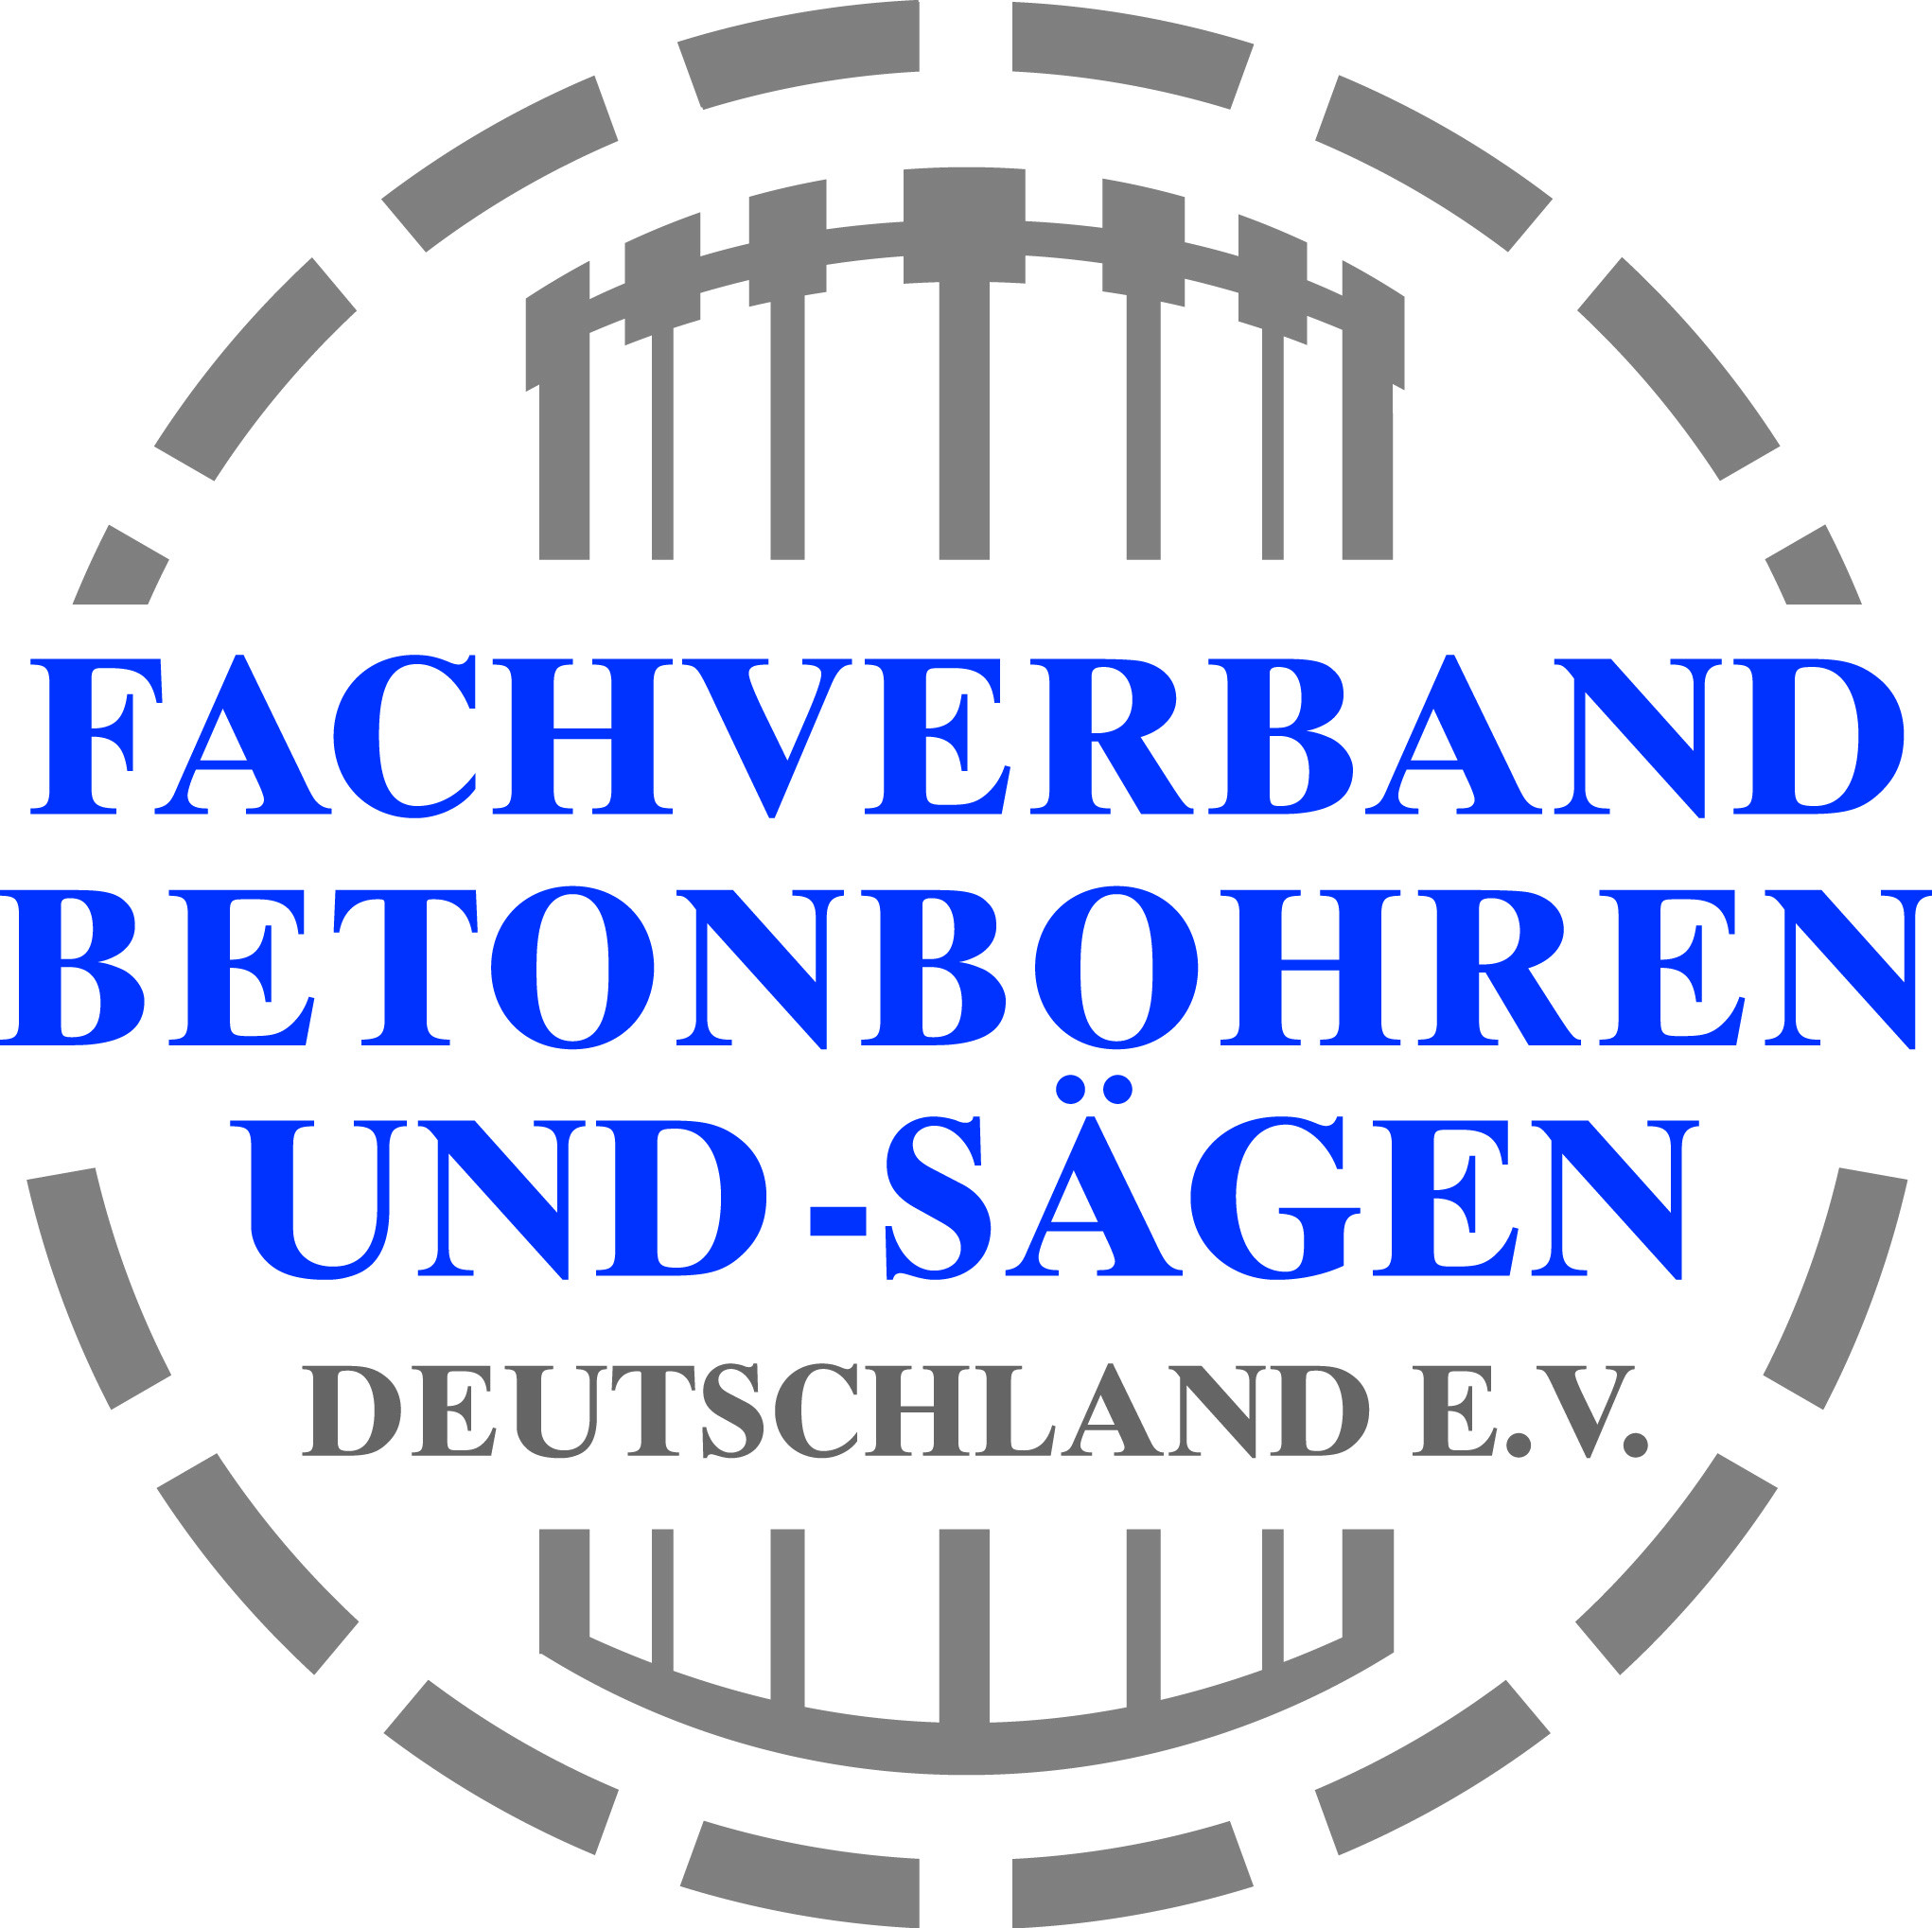 FBS Logo